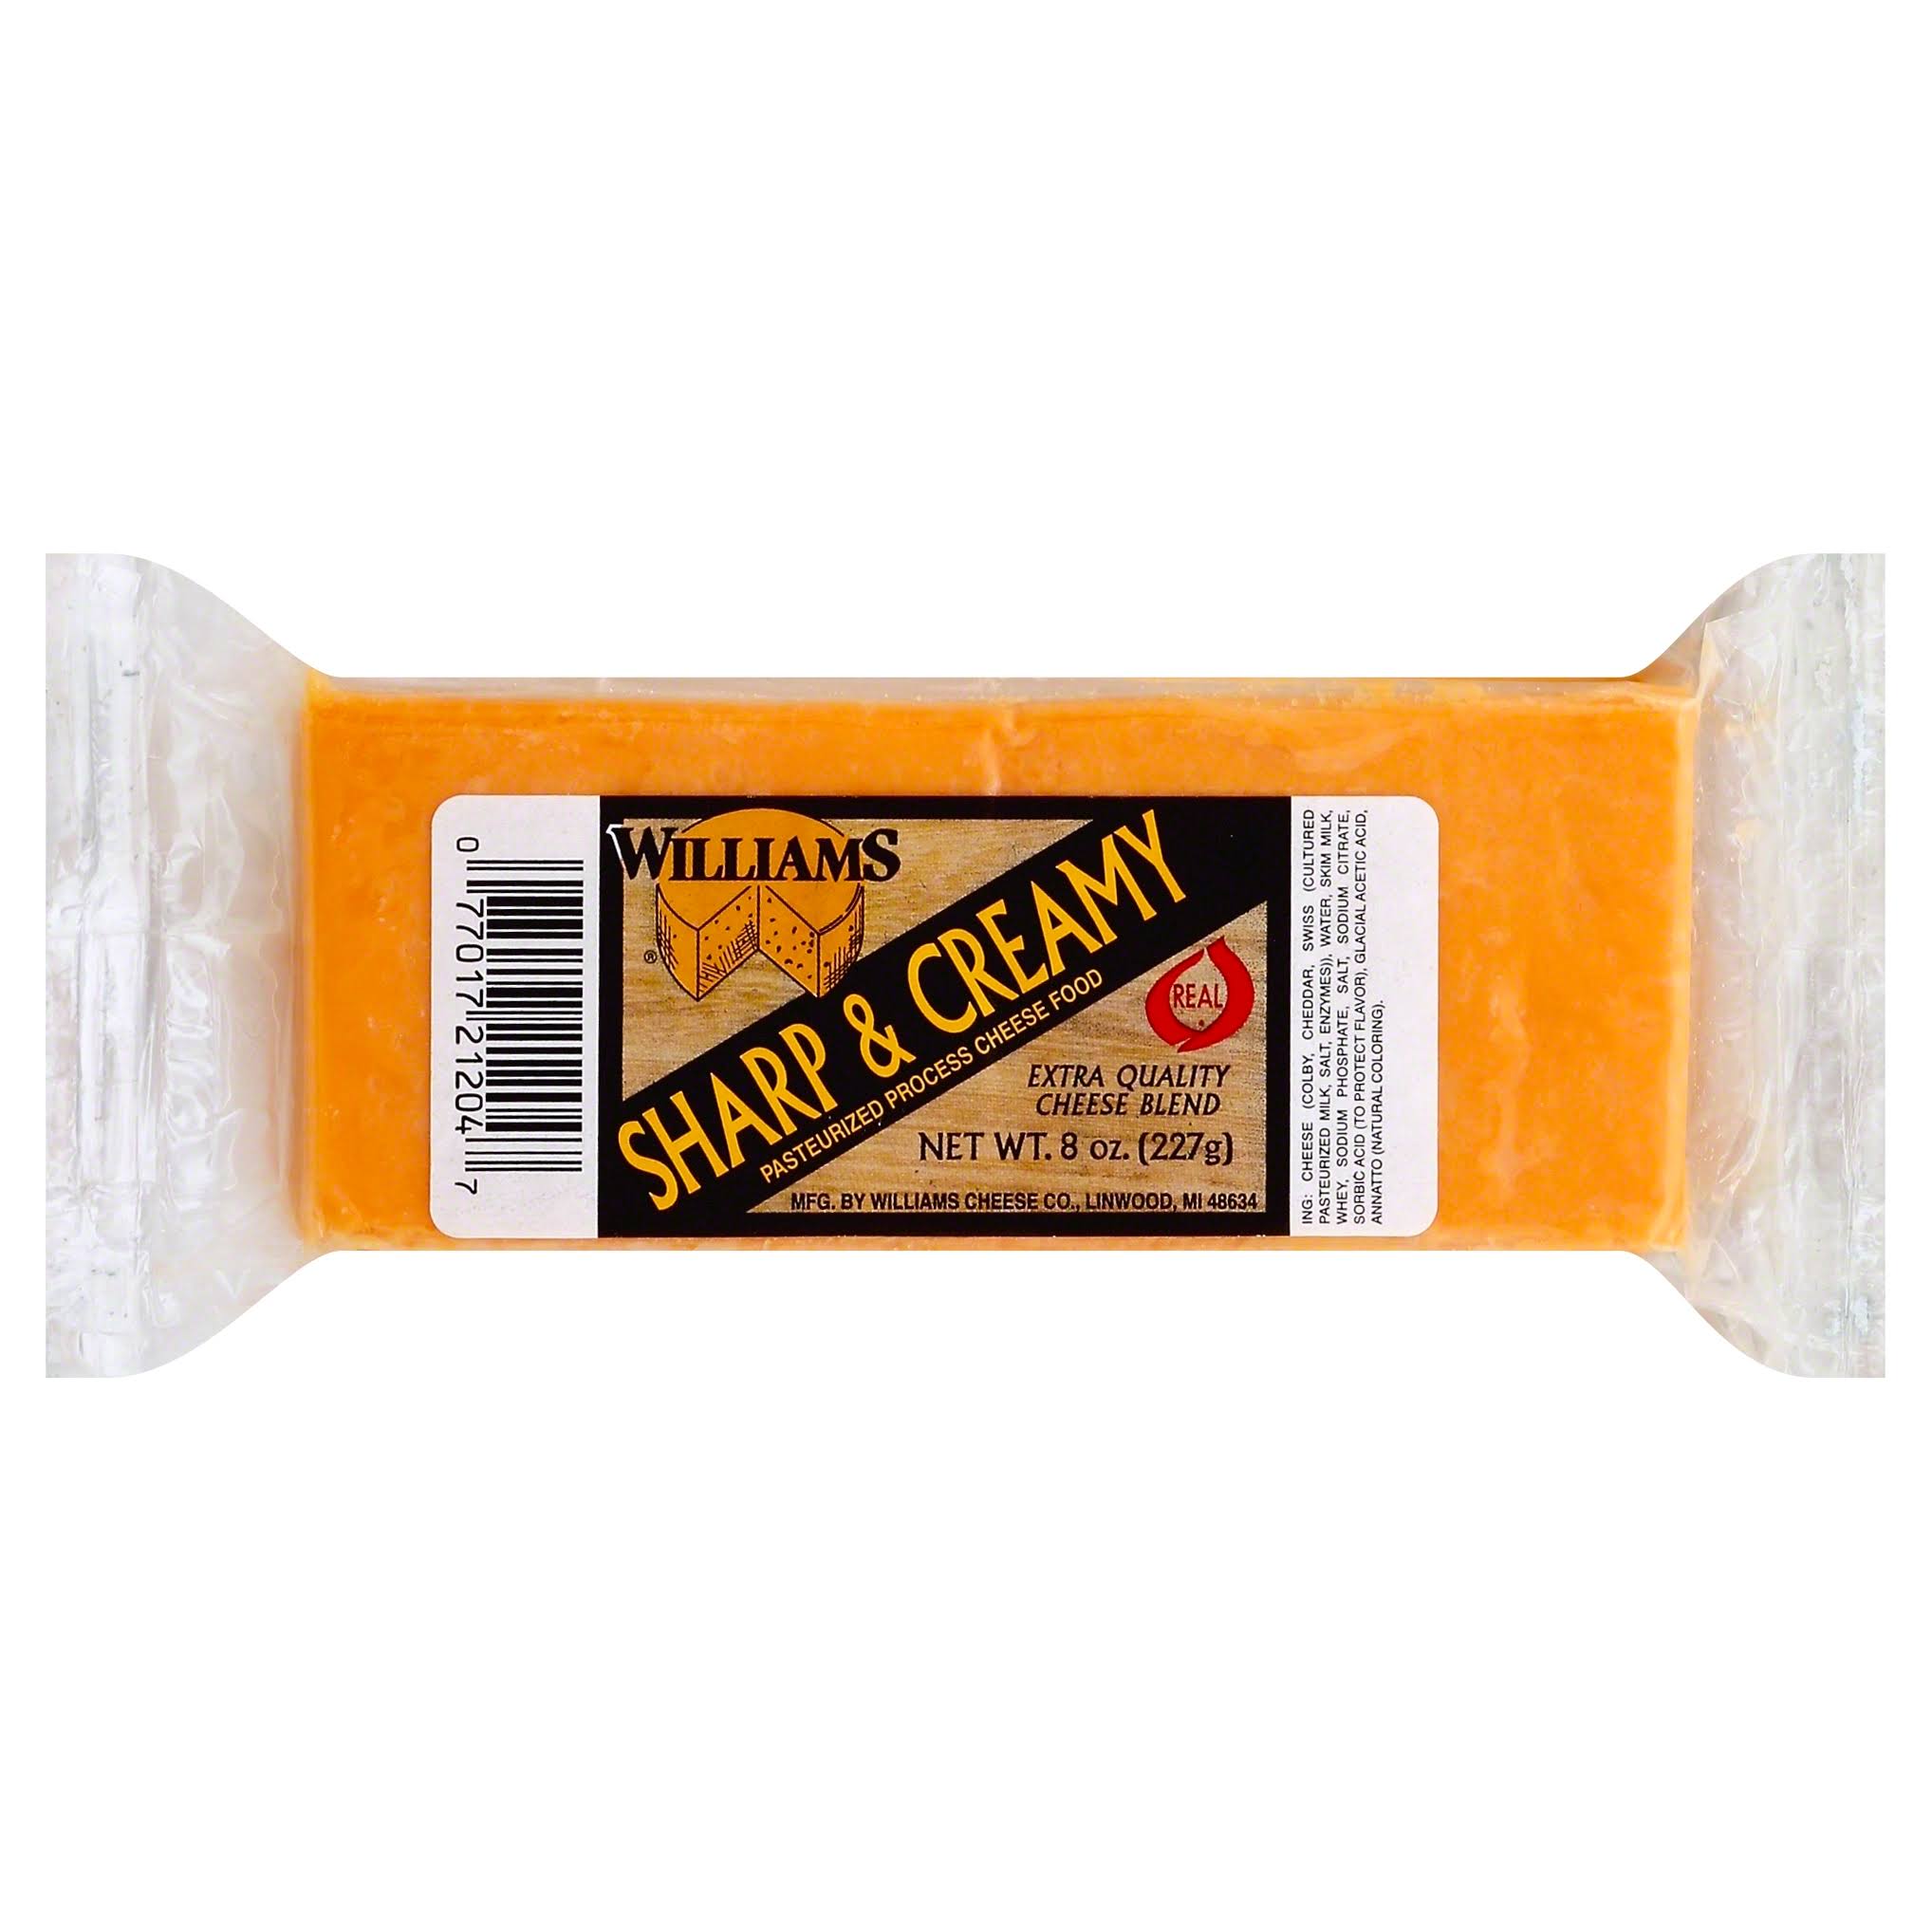 Williams Sharp and Creamy Cheese - 8oz